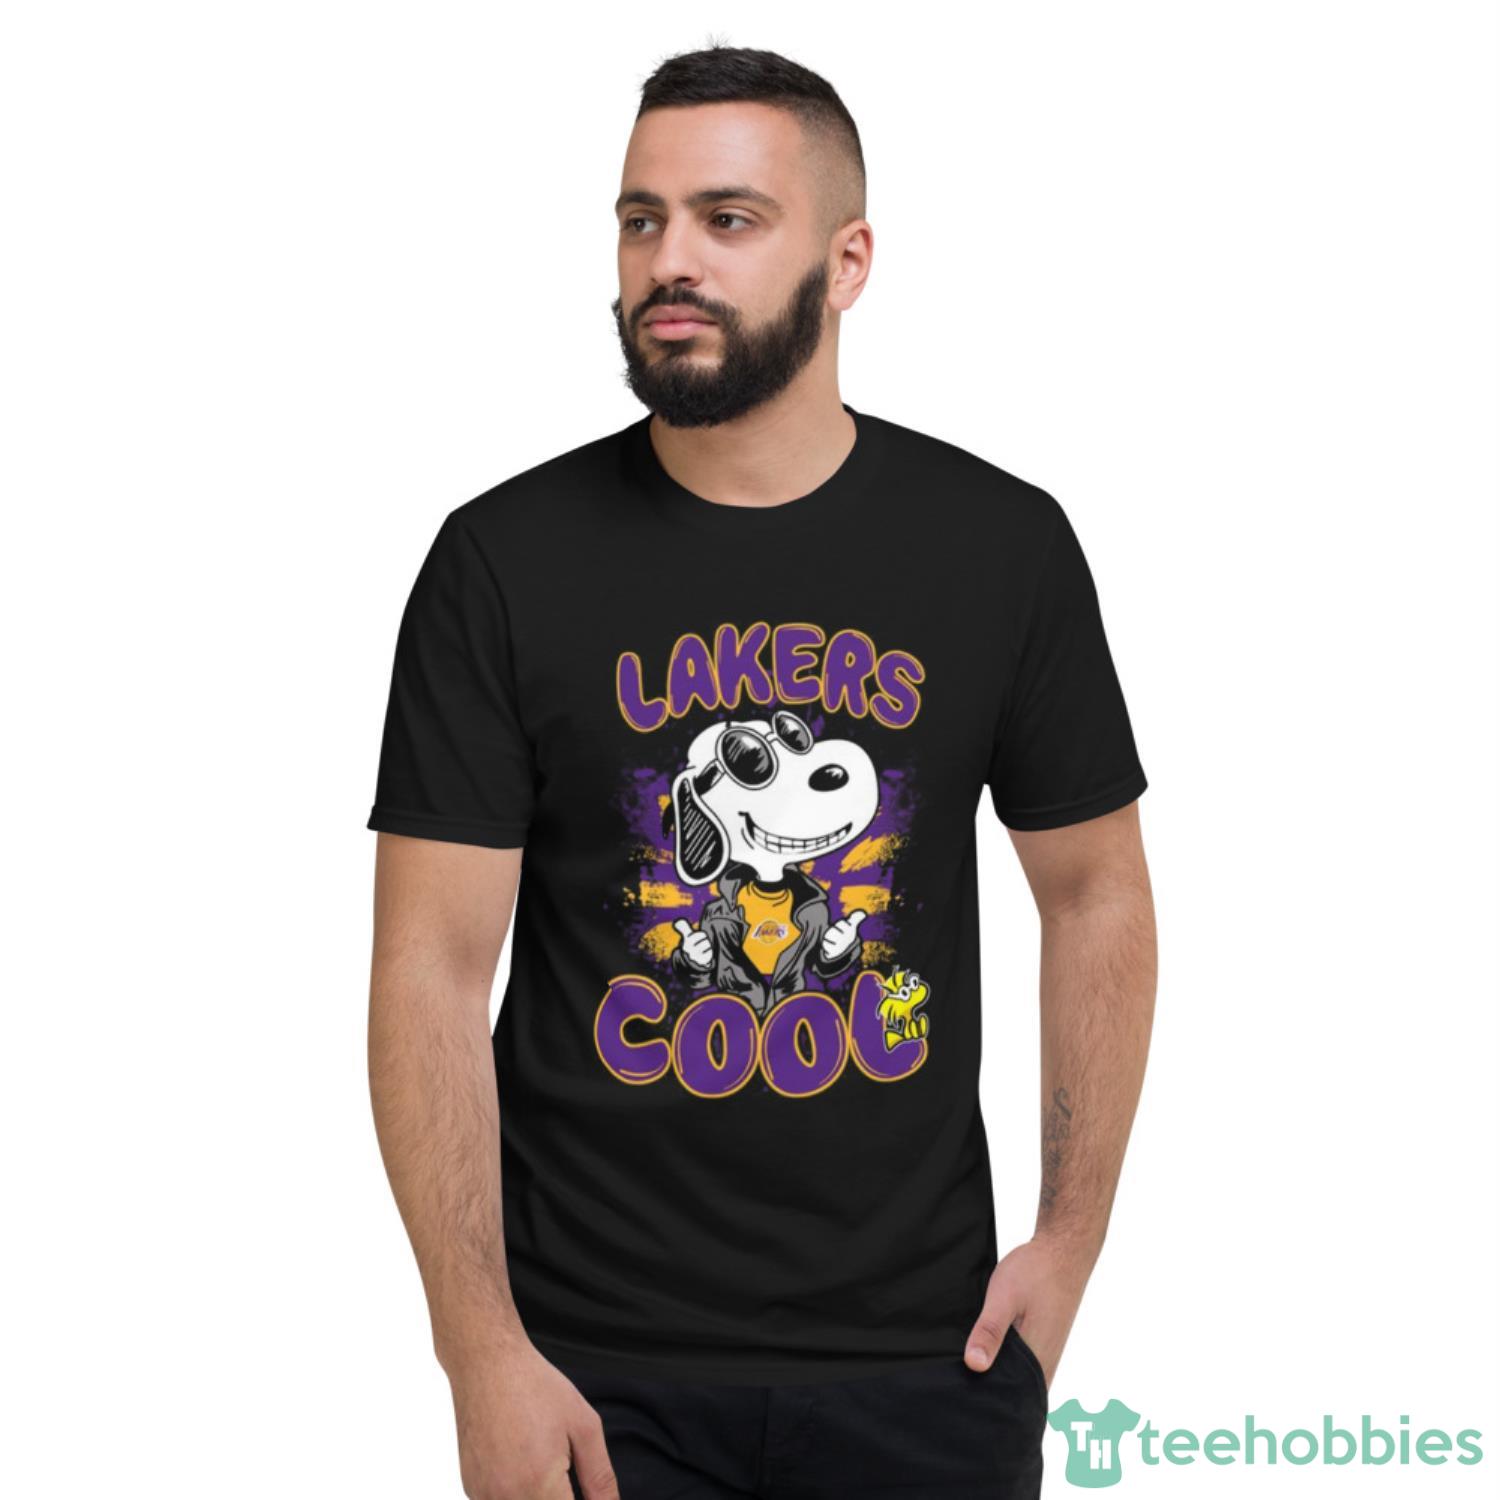 NBA Basketball Los Angeles Lakers Cool Snoopy Shirt T Shirt - Short Sleeve T-Shirt